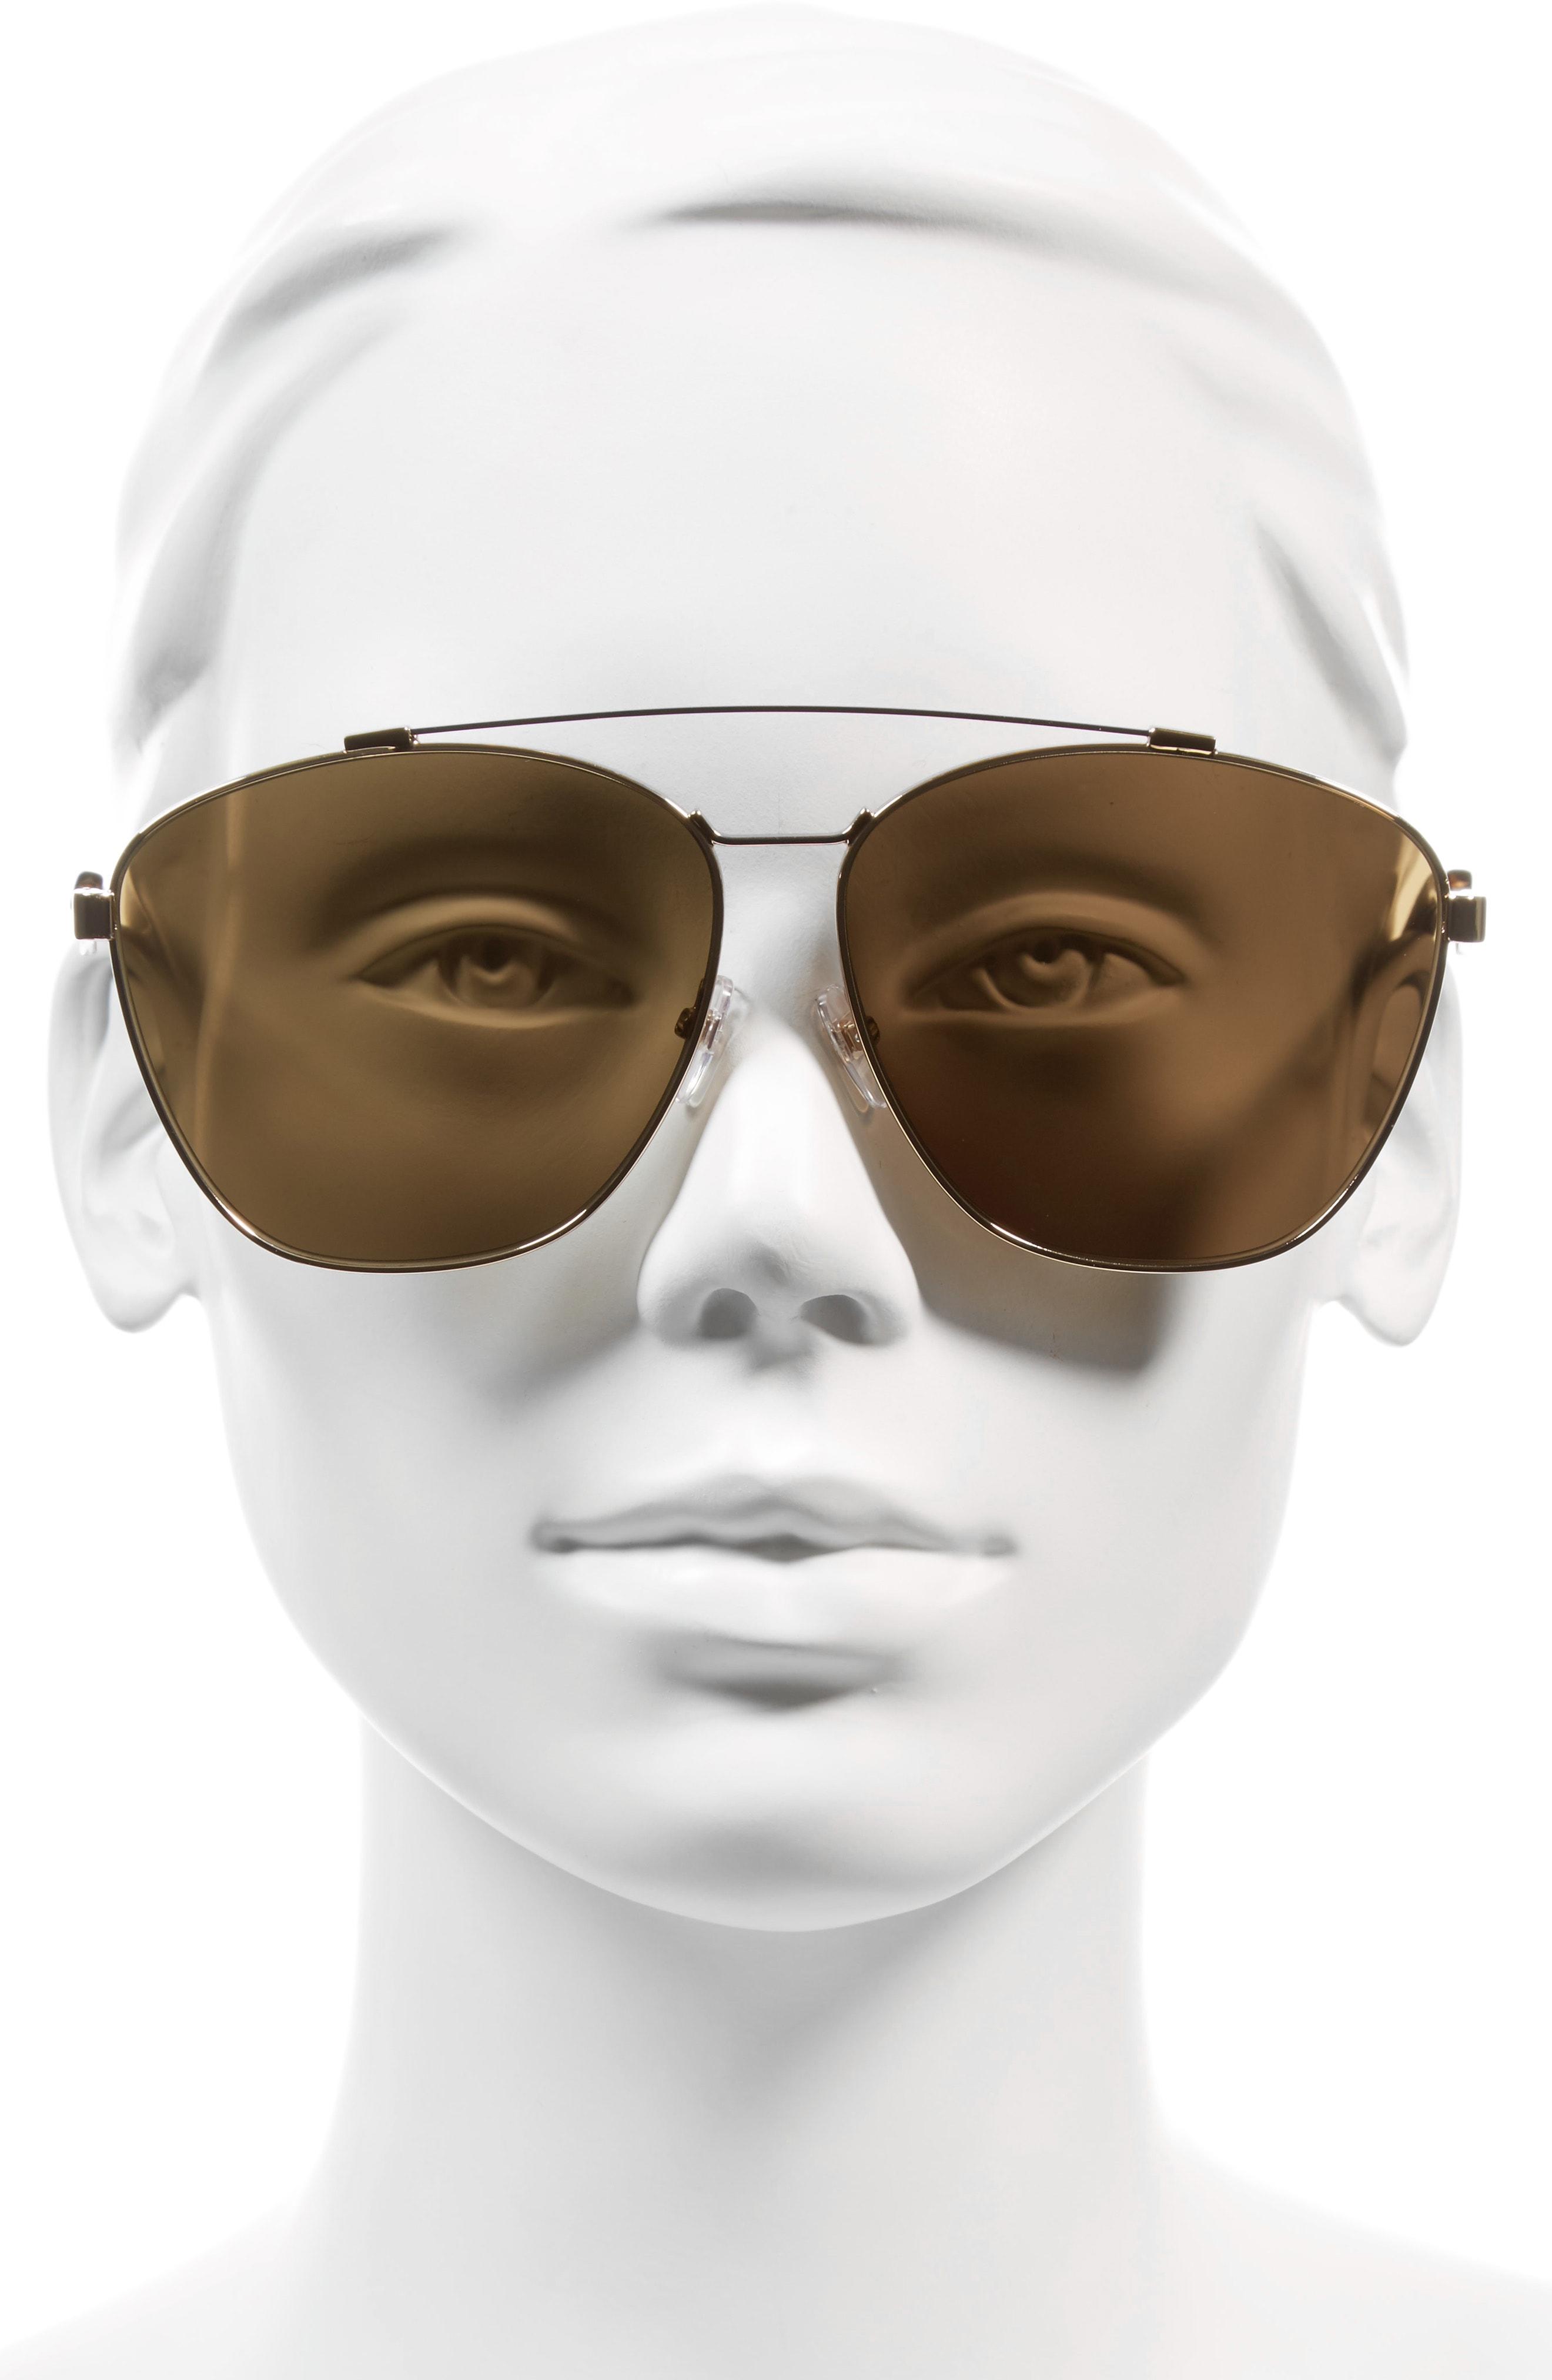 Givenchy 65mm Round Aviator Sunglasses - Gold | ModeSens